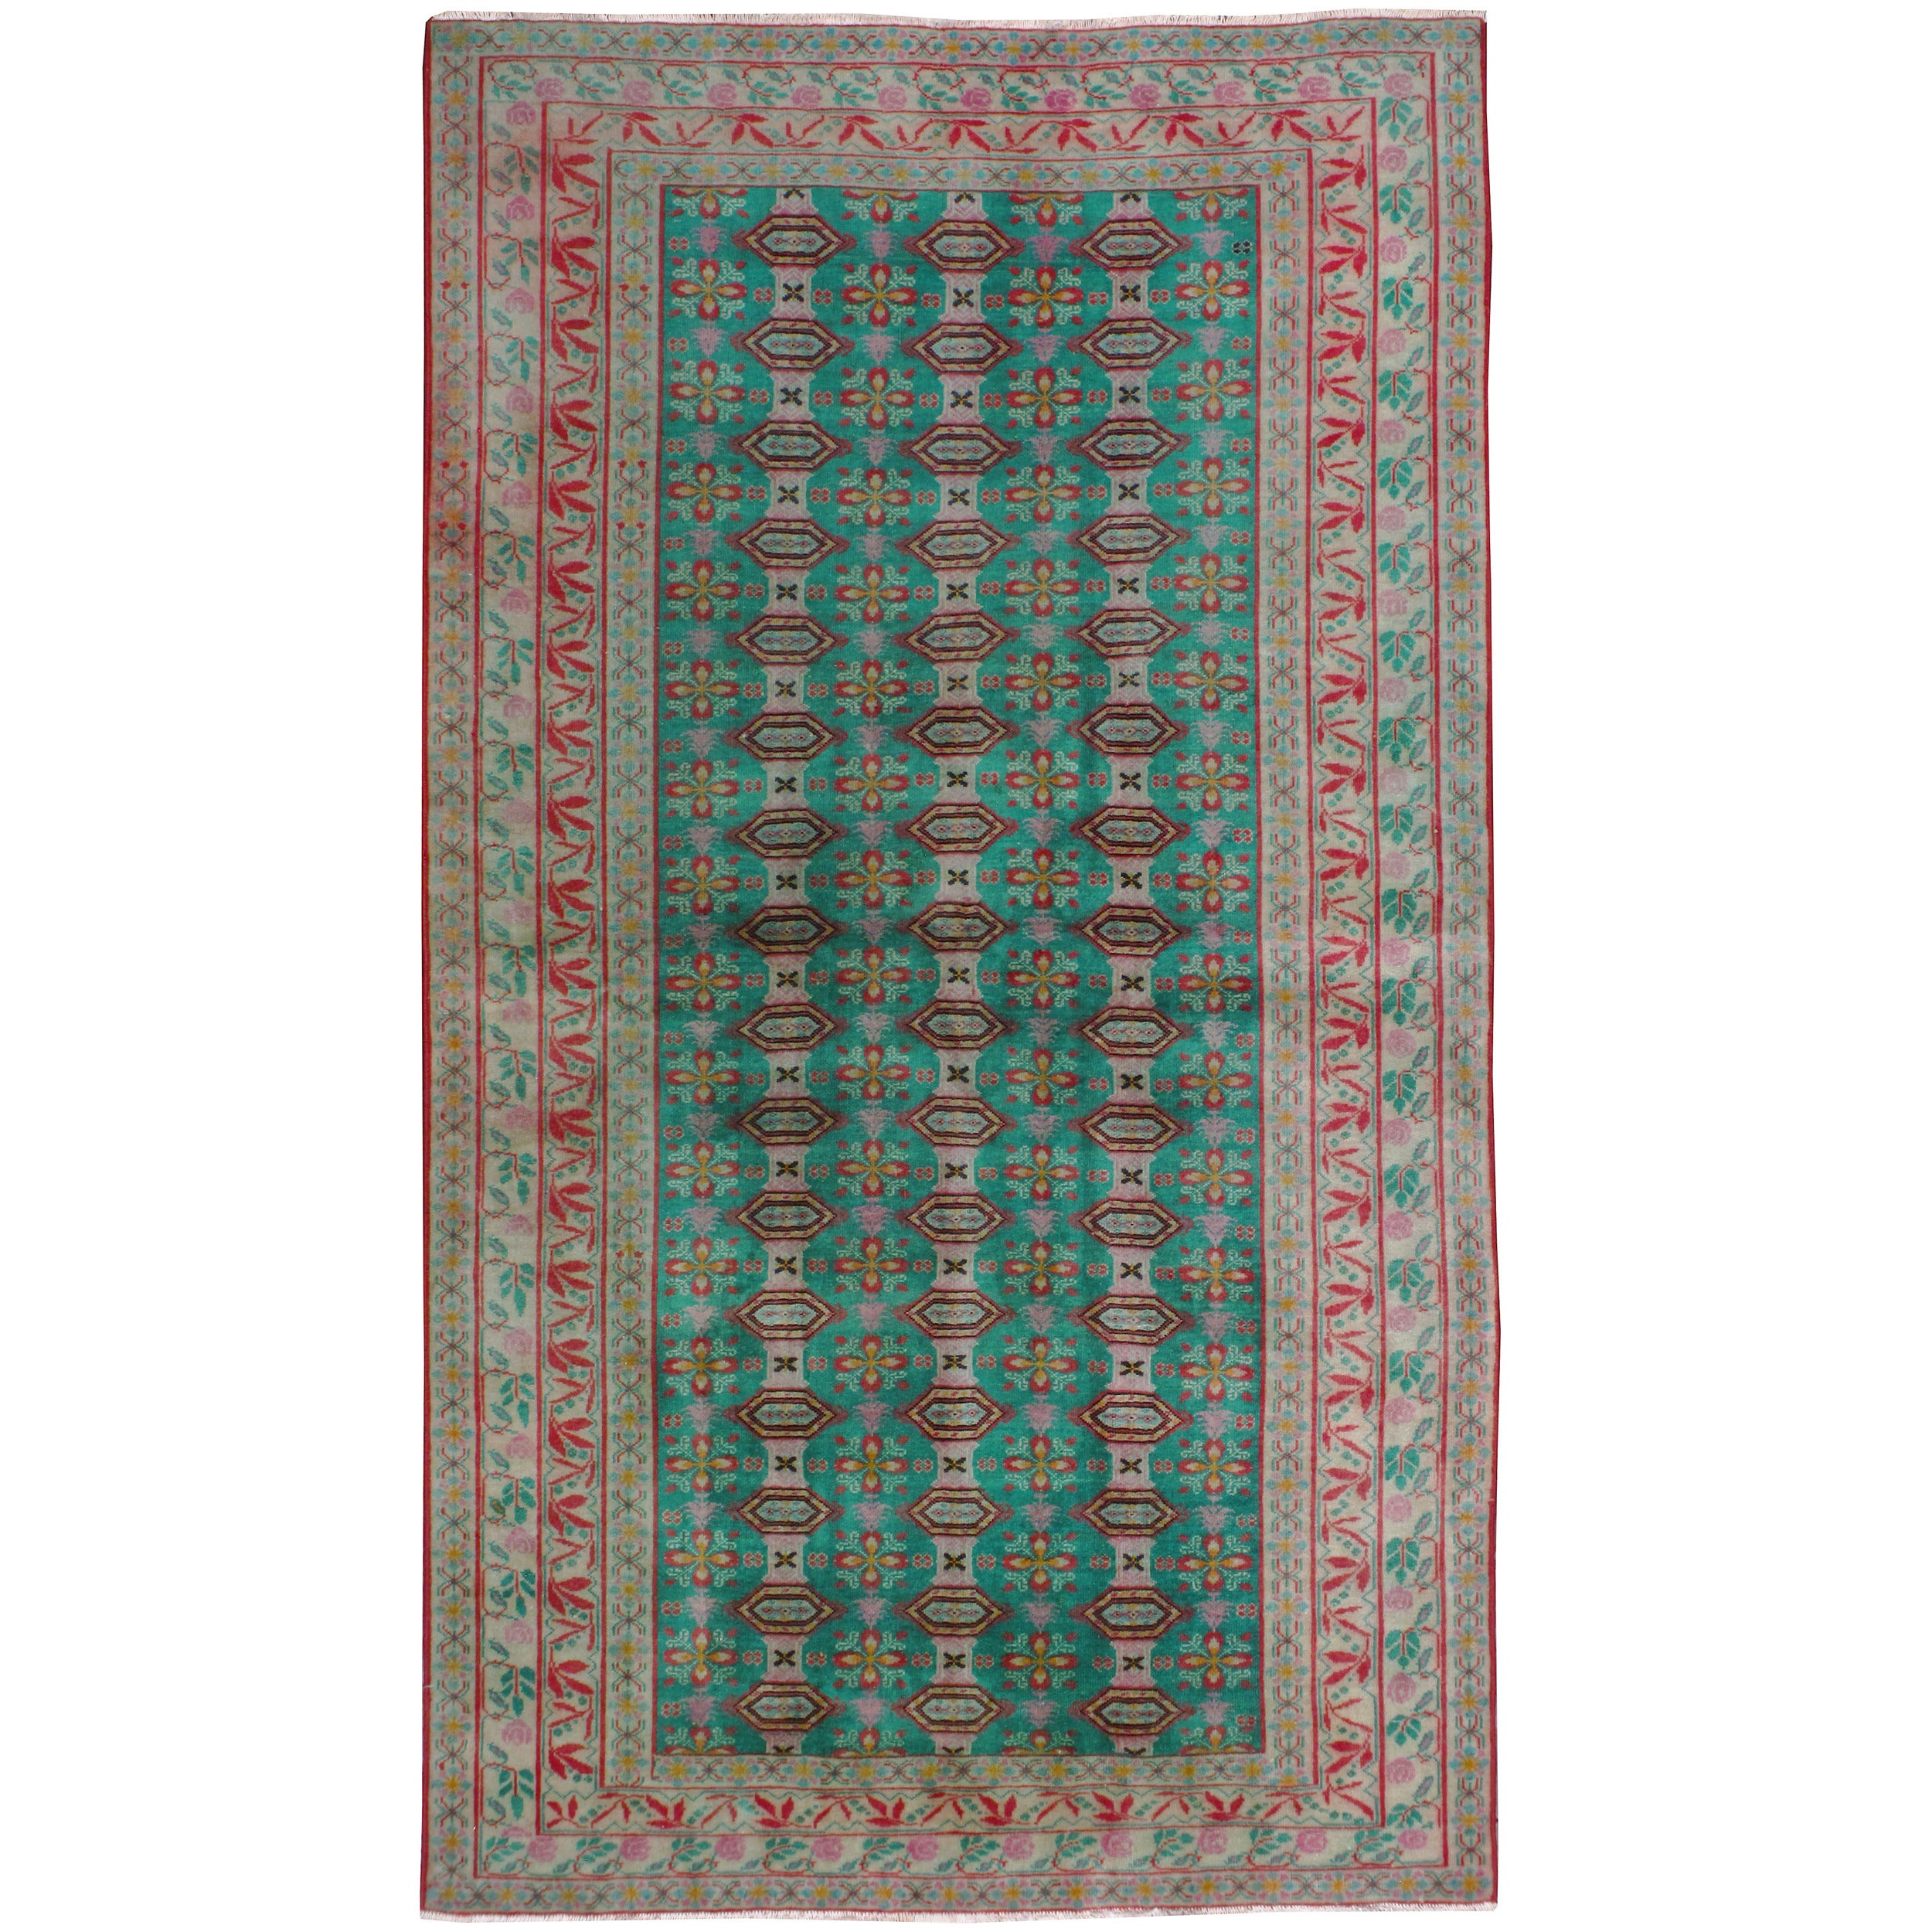 Vintage Central Asian Turkoman Rug